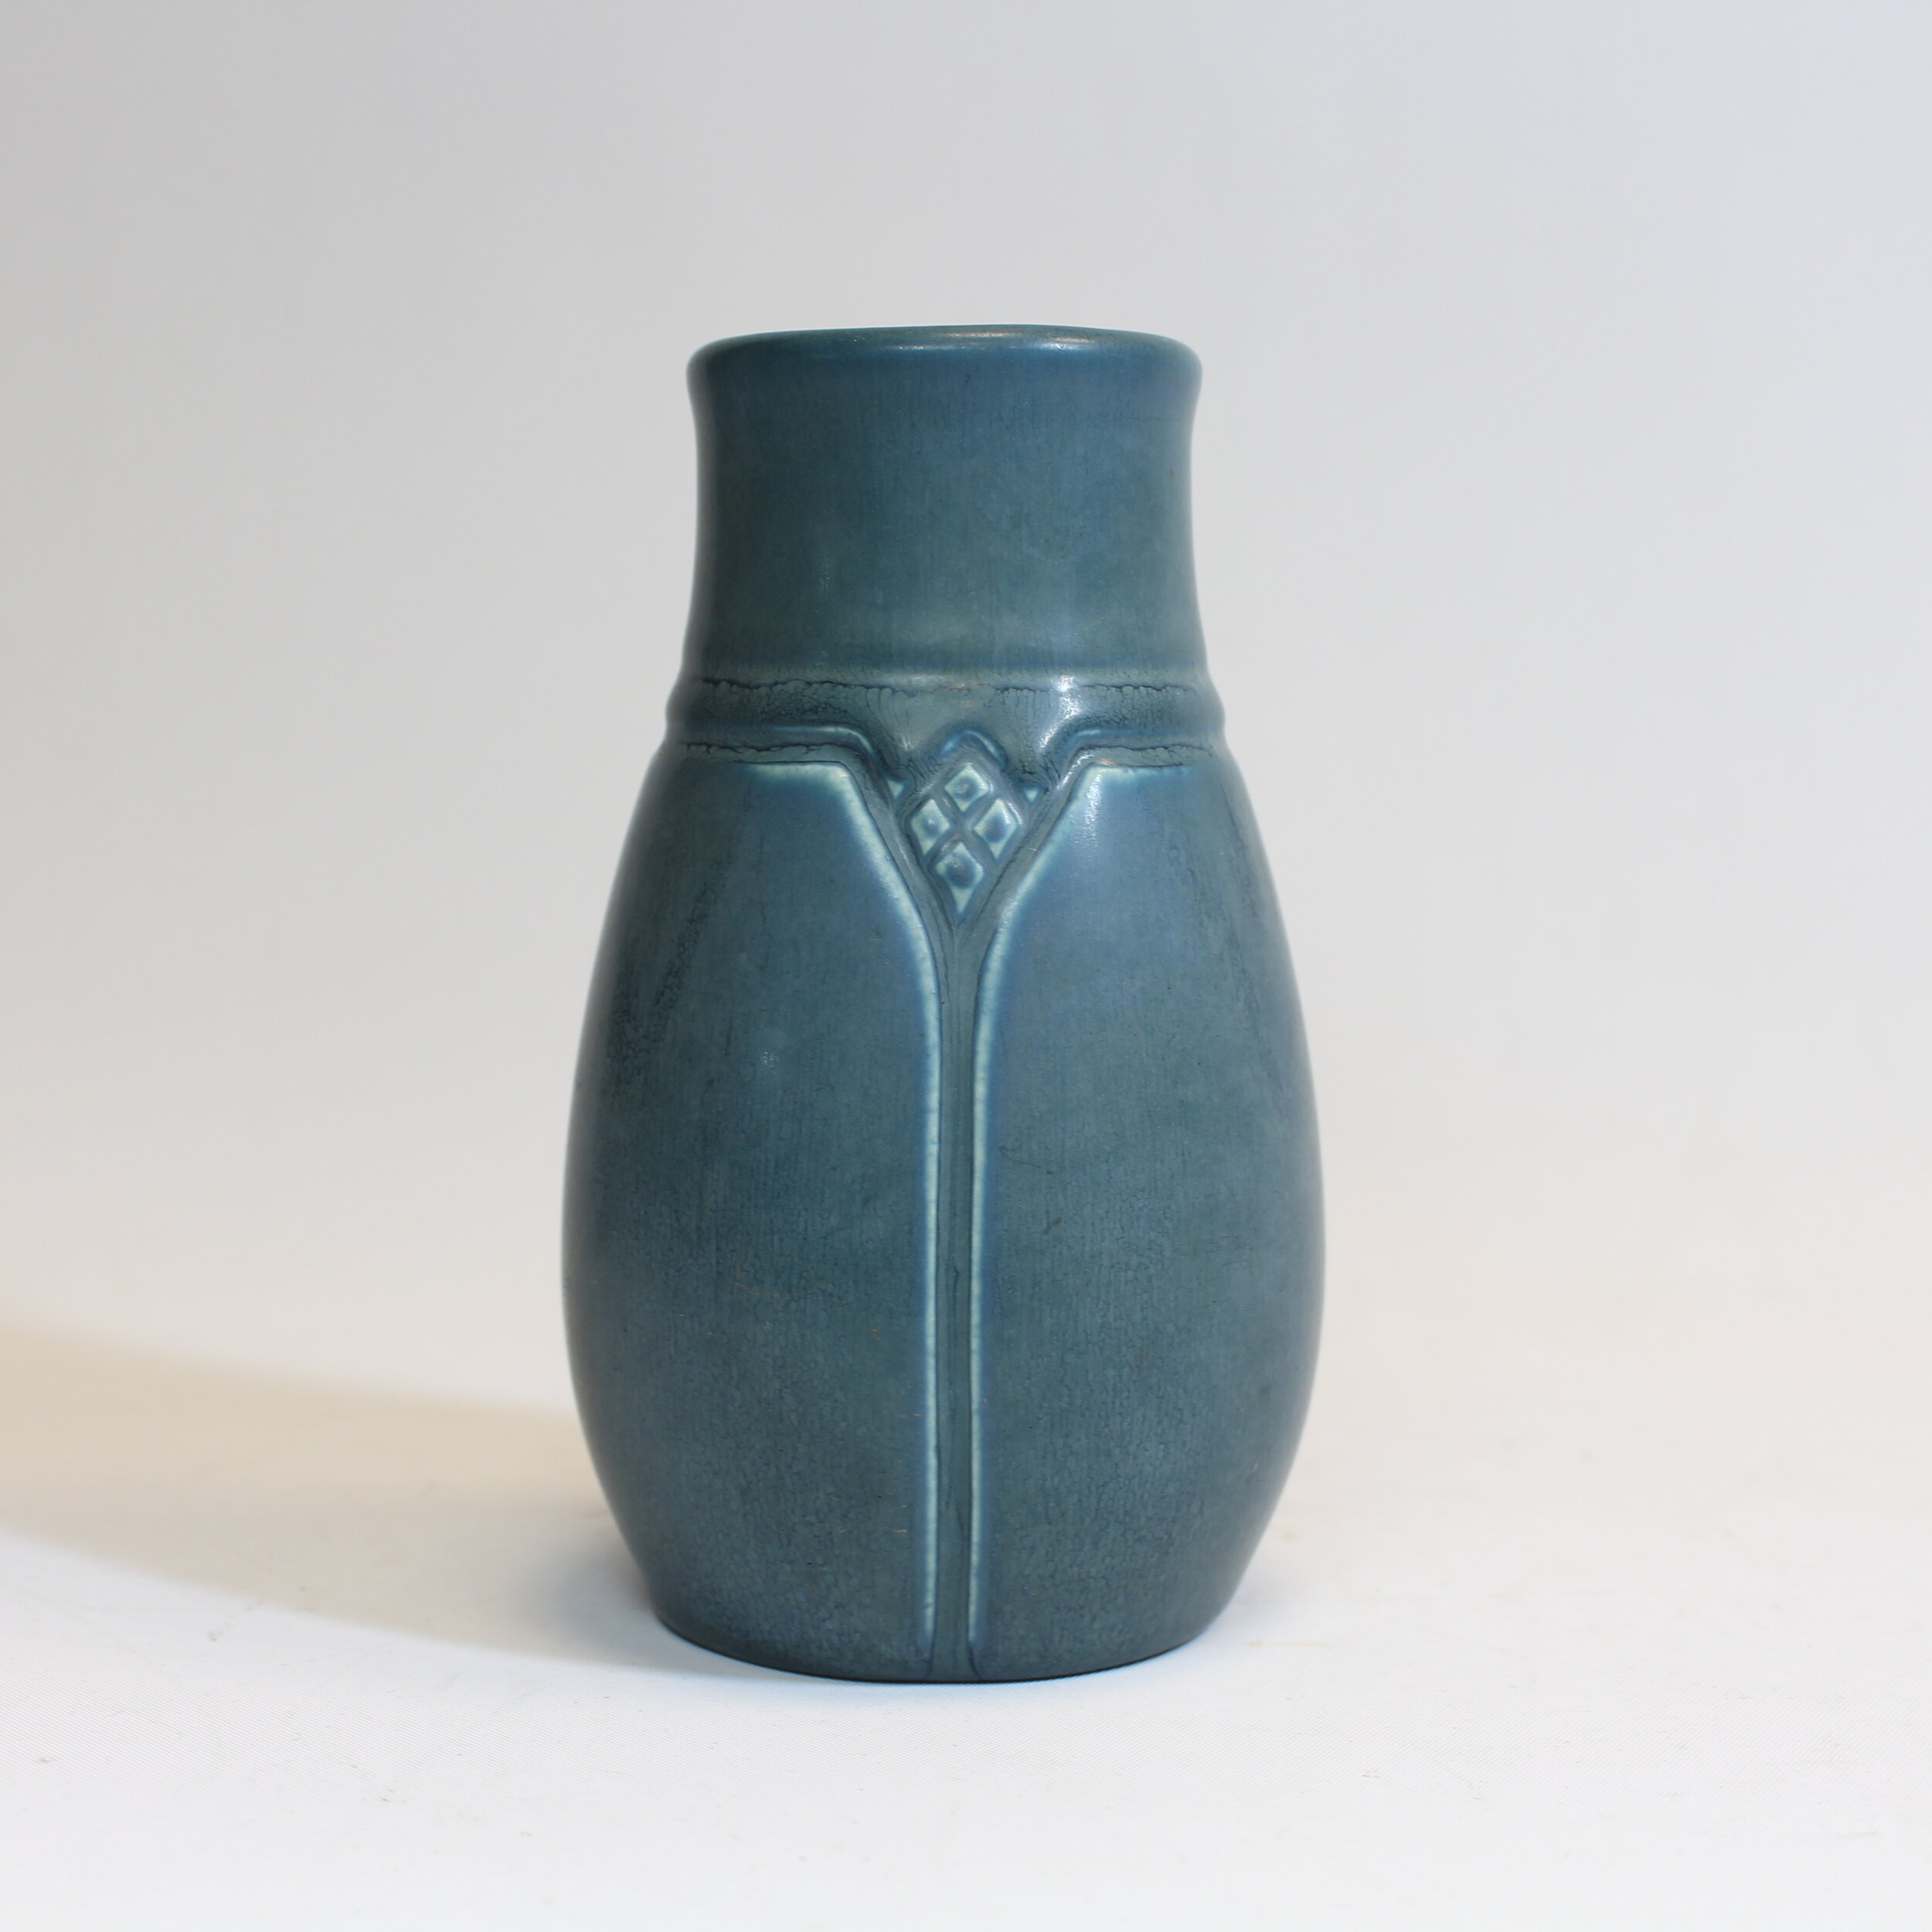 SOLD, Rookwood Pottery Vase, No. 1825